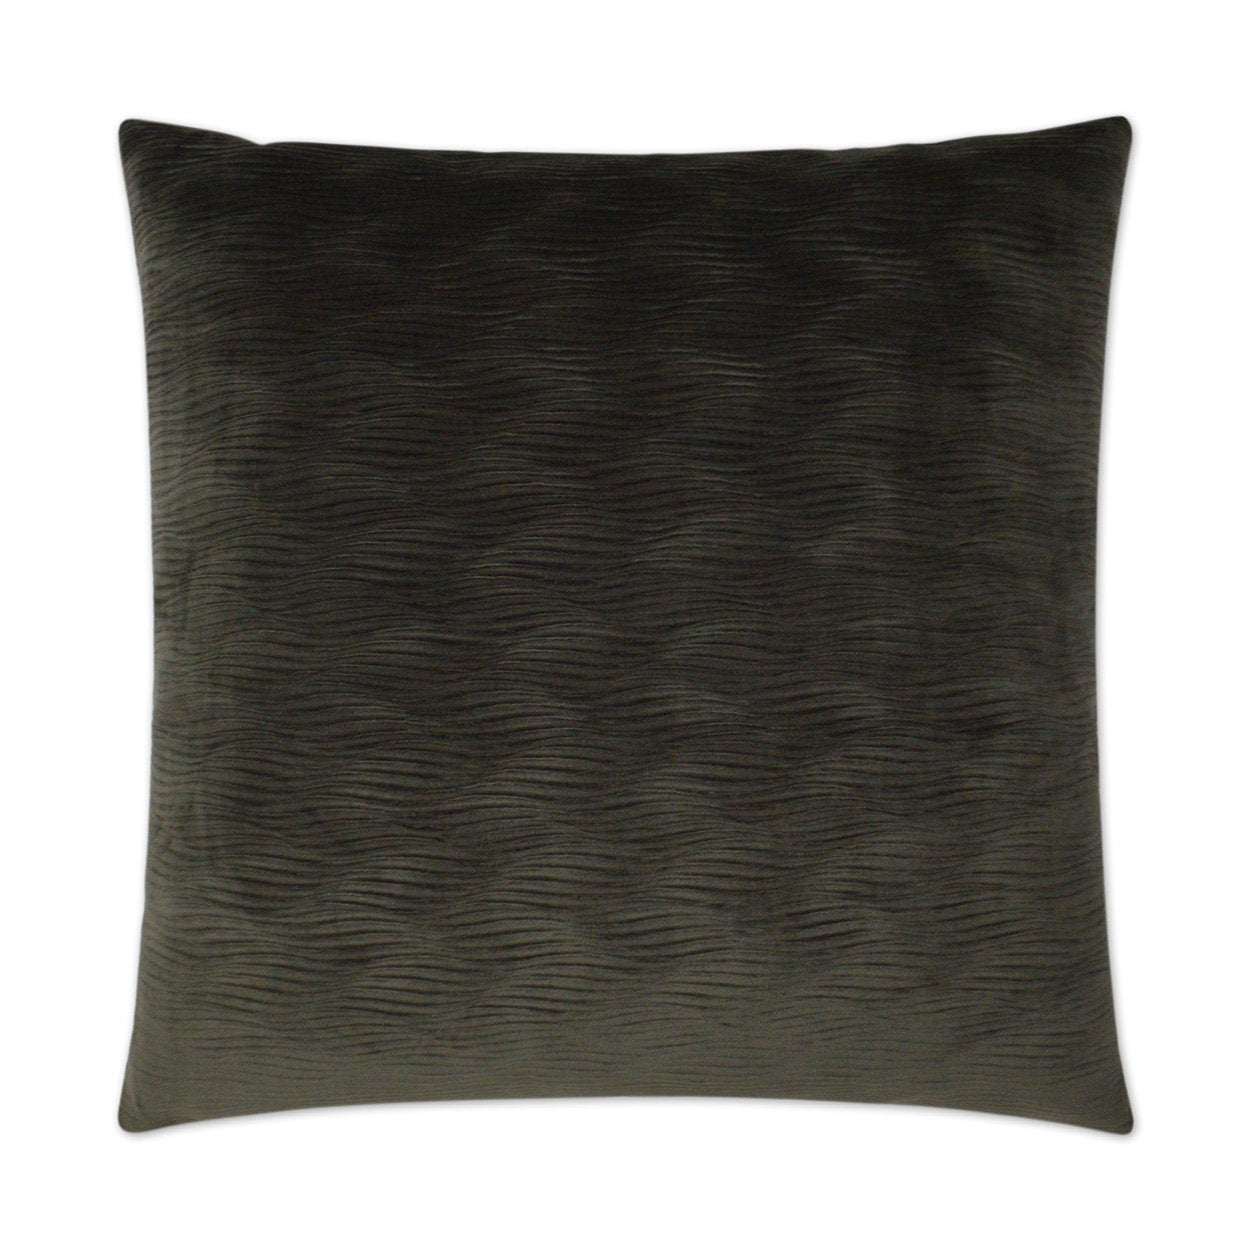 Luxury Pillow - 24” x 24” - Stream Granite; Solid dark gray in a smooth wavy pattern